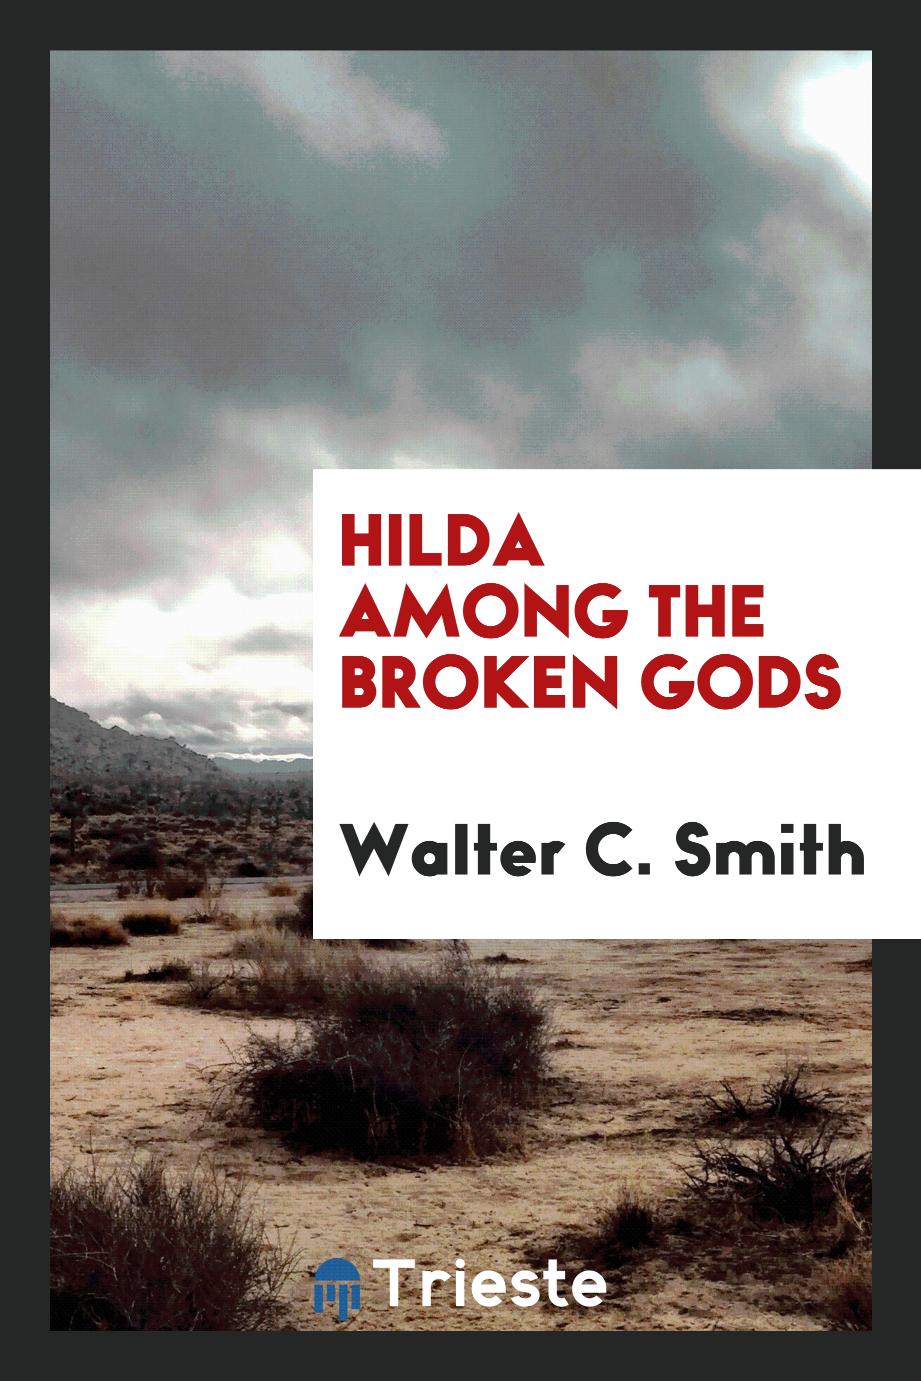 Hilda among the broken gods